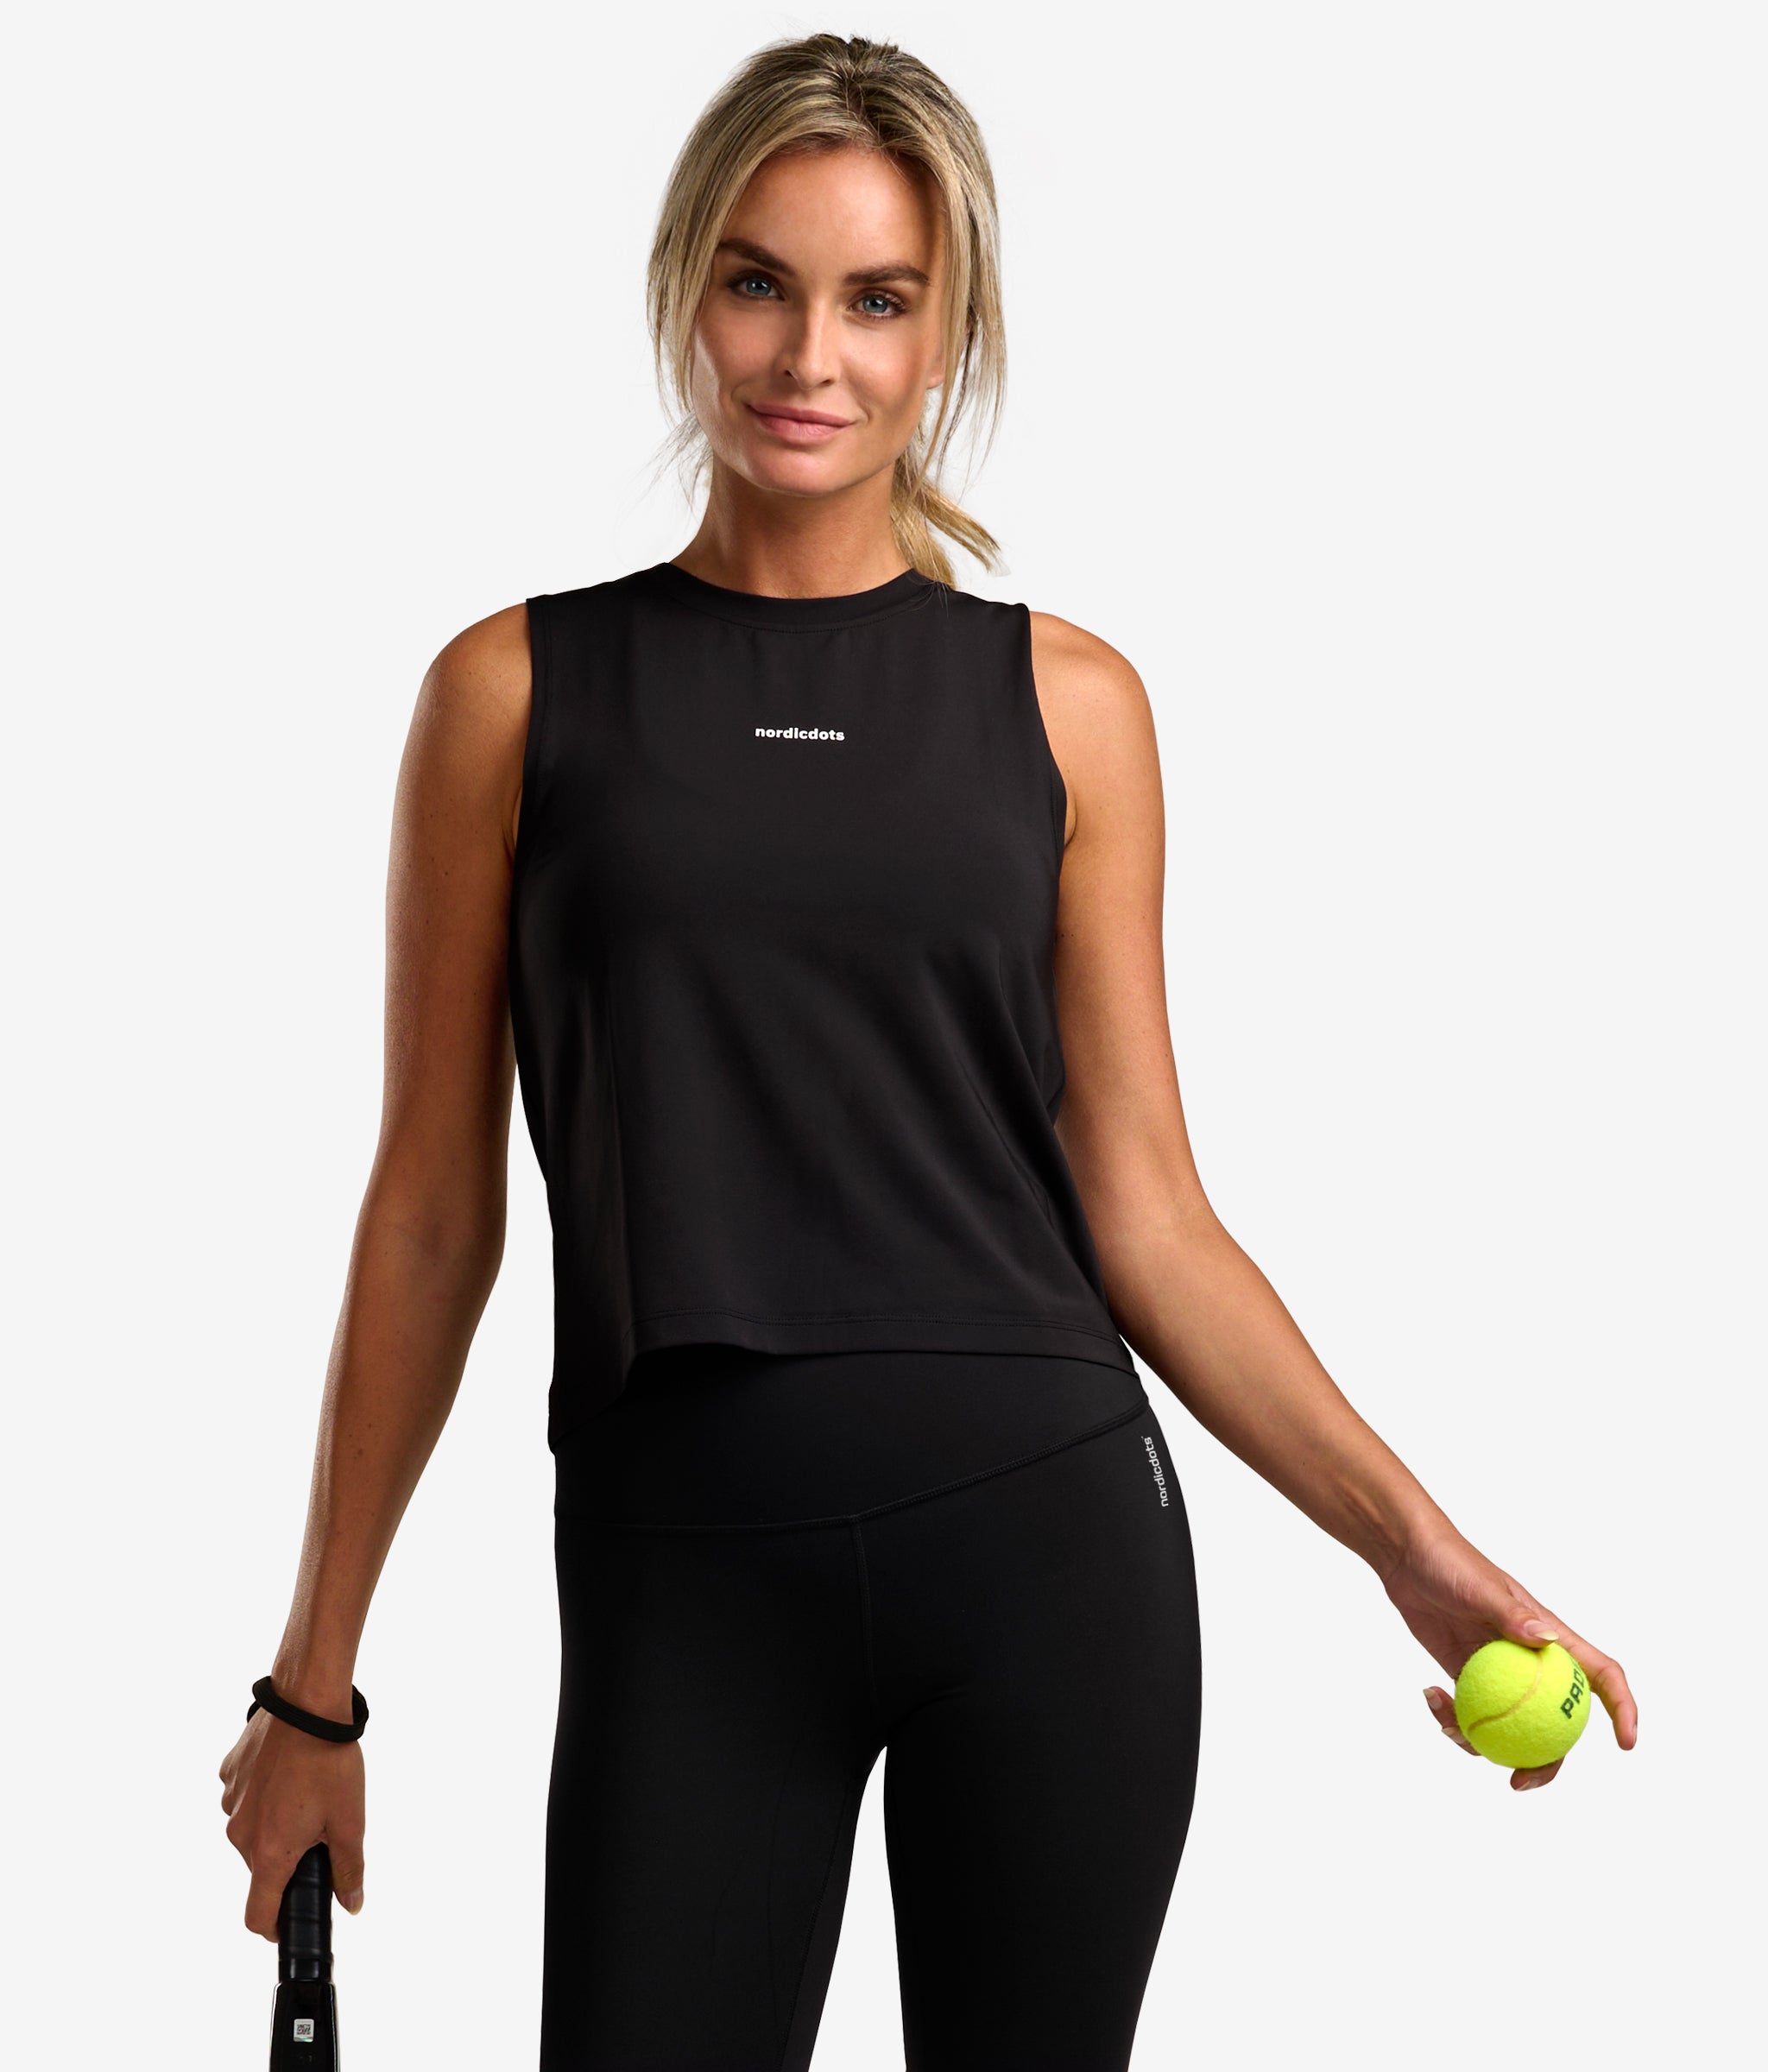 nordicdots tank top black women tennis padel eco-friendly apparel